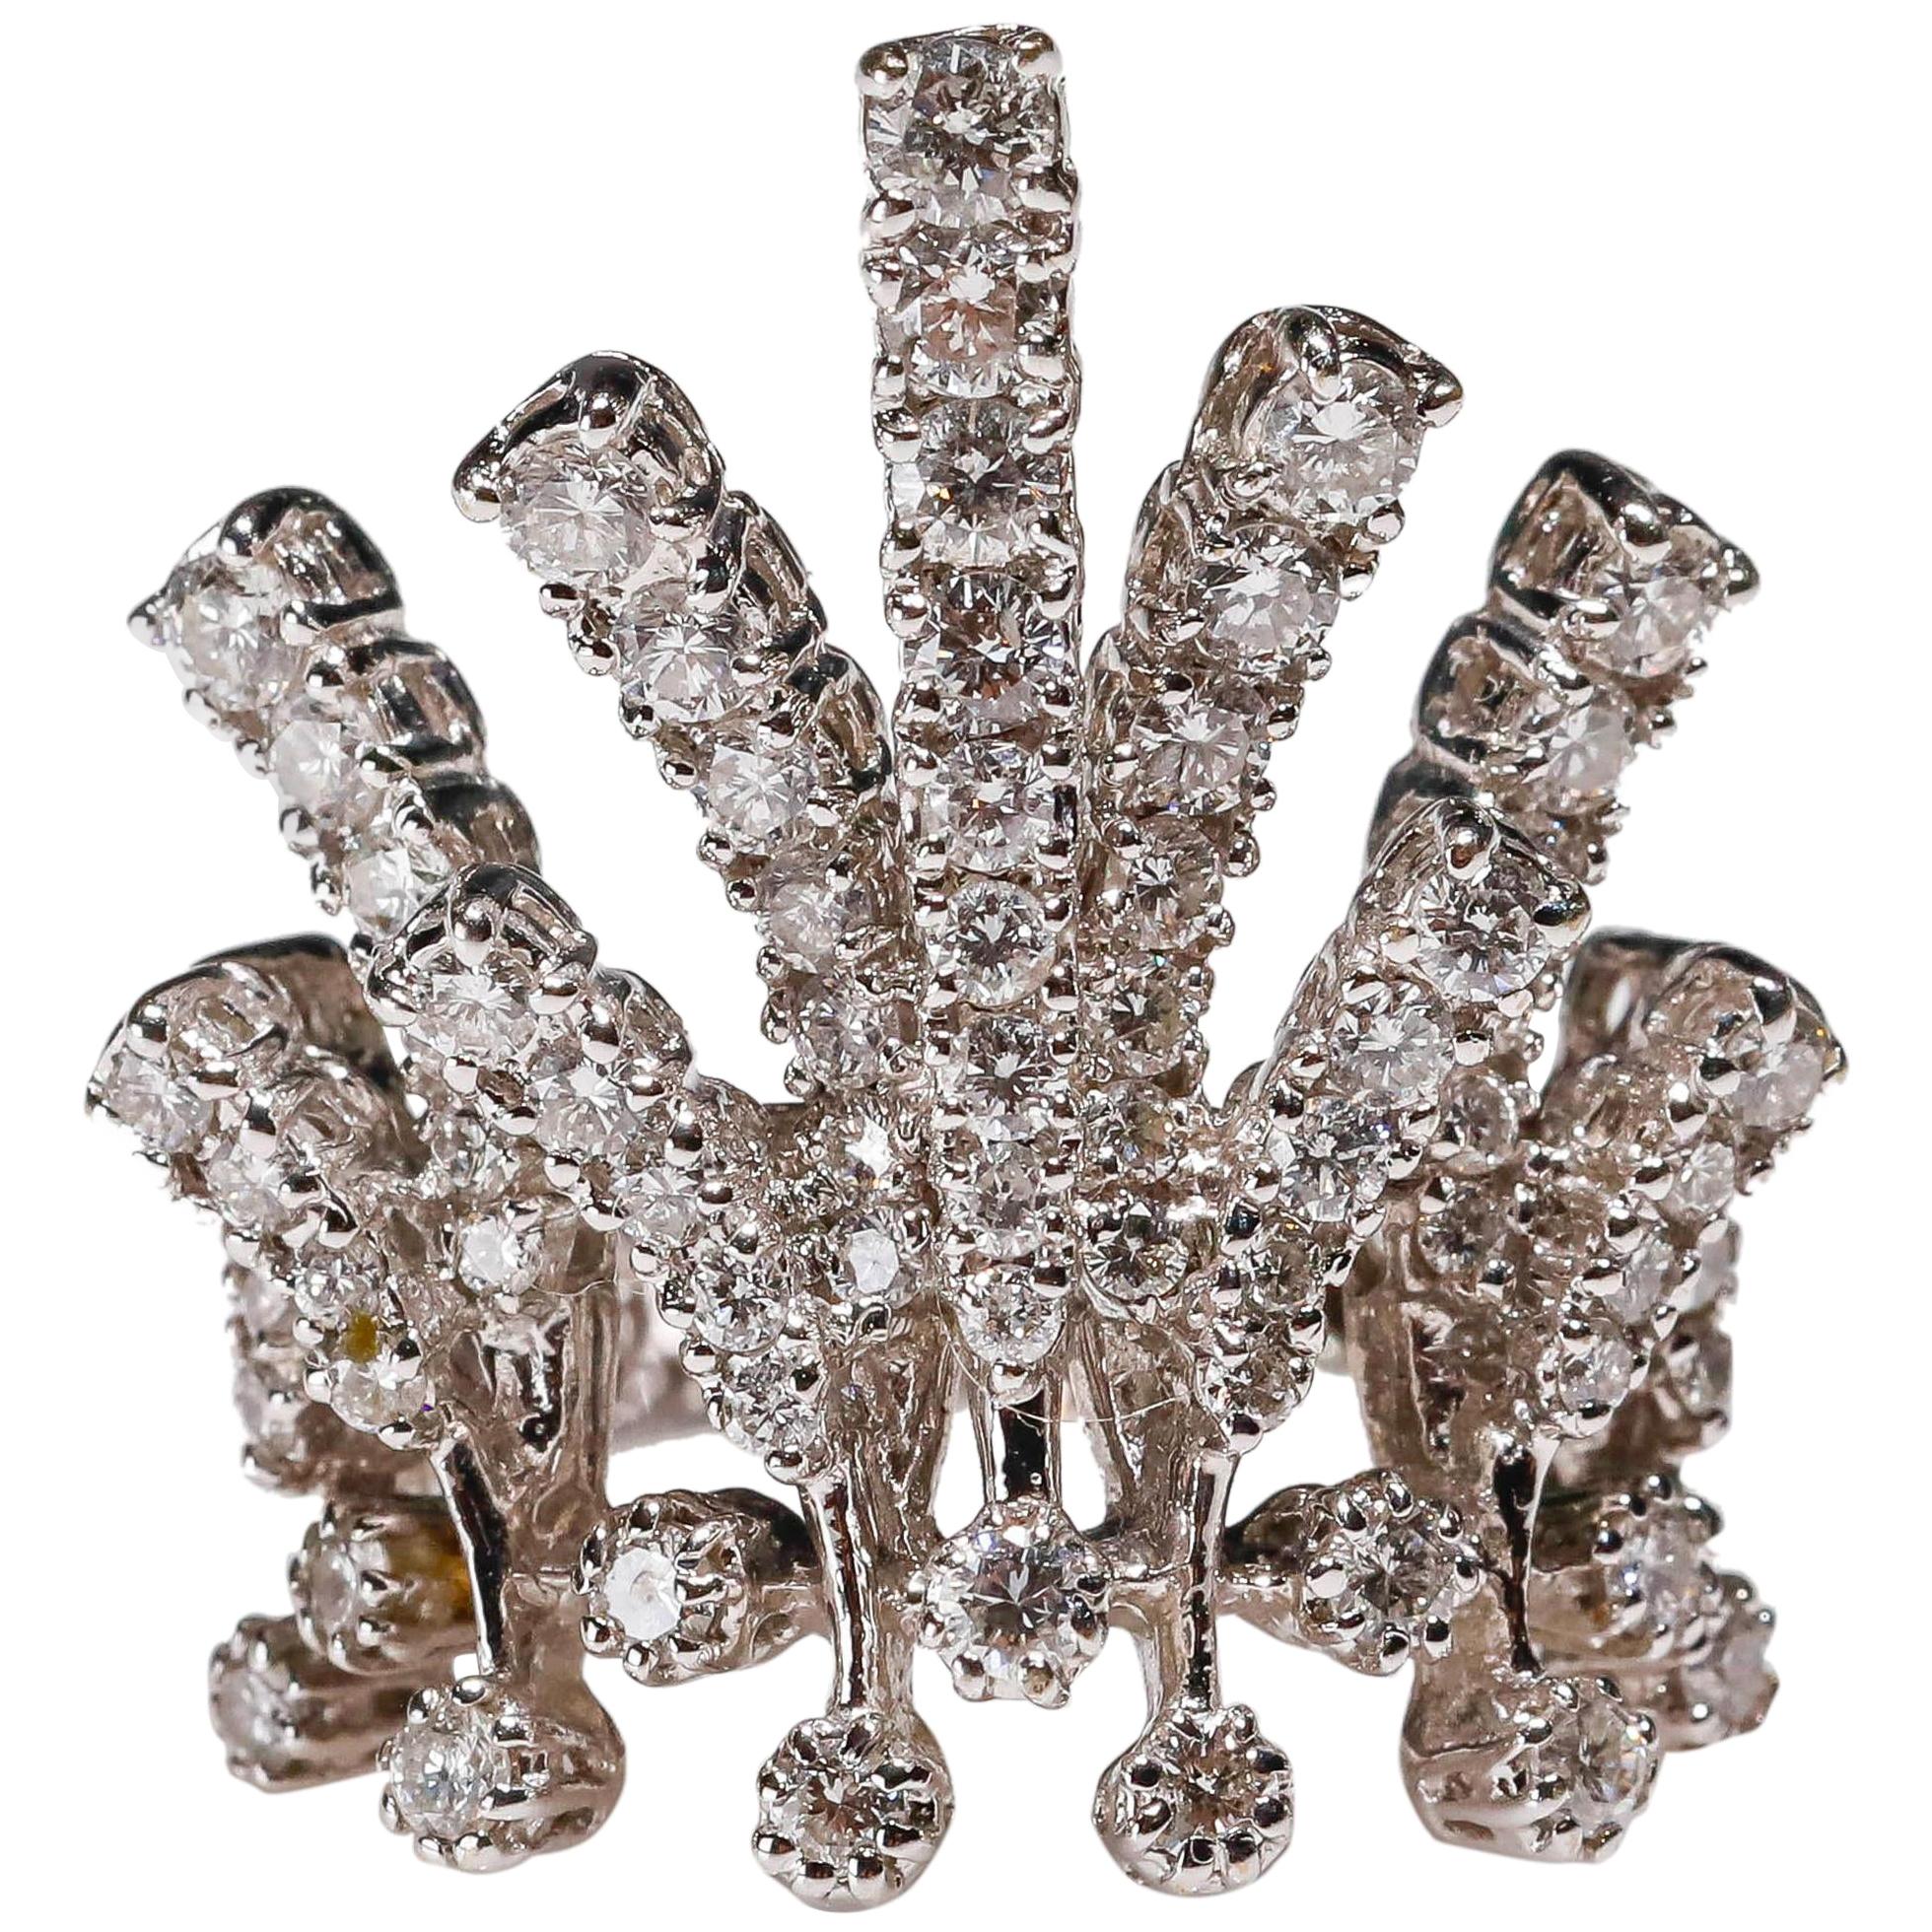 18 Karat White Gold 1.8 Carat Round Cut Diamond Ring Crown Design Fine Jewelry